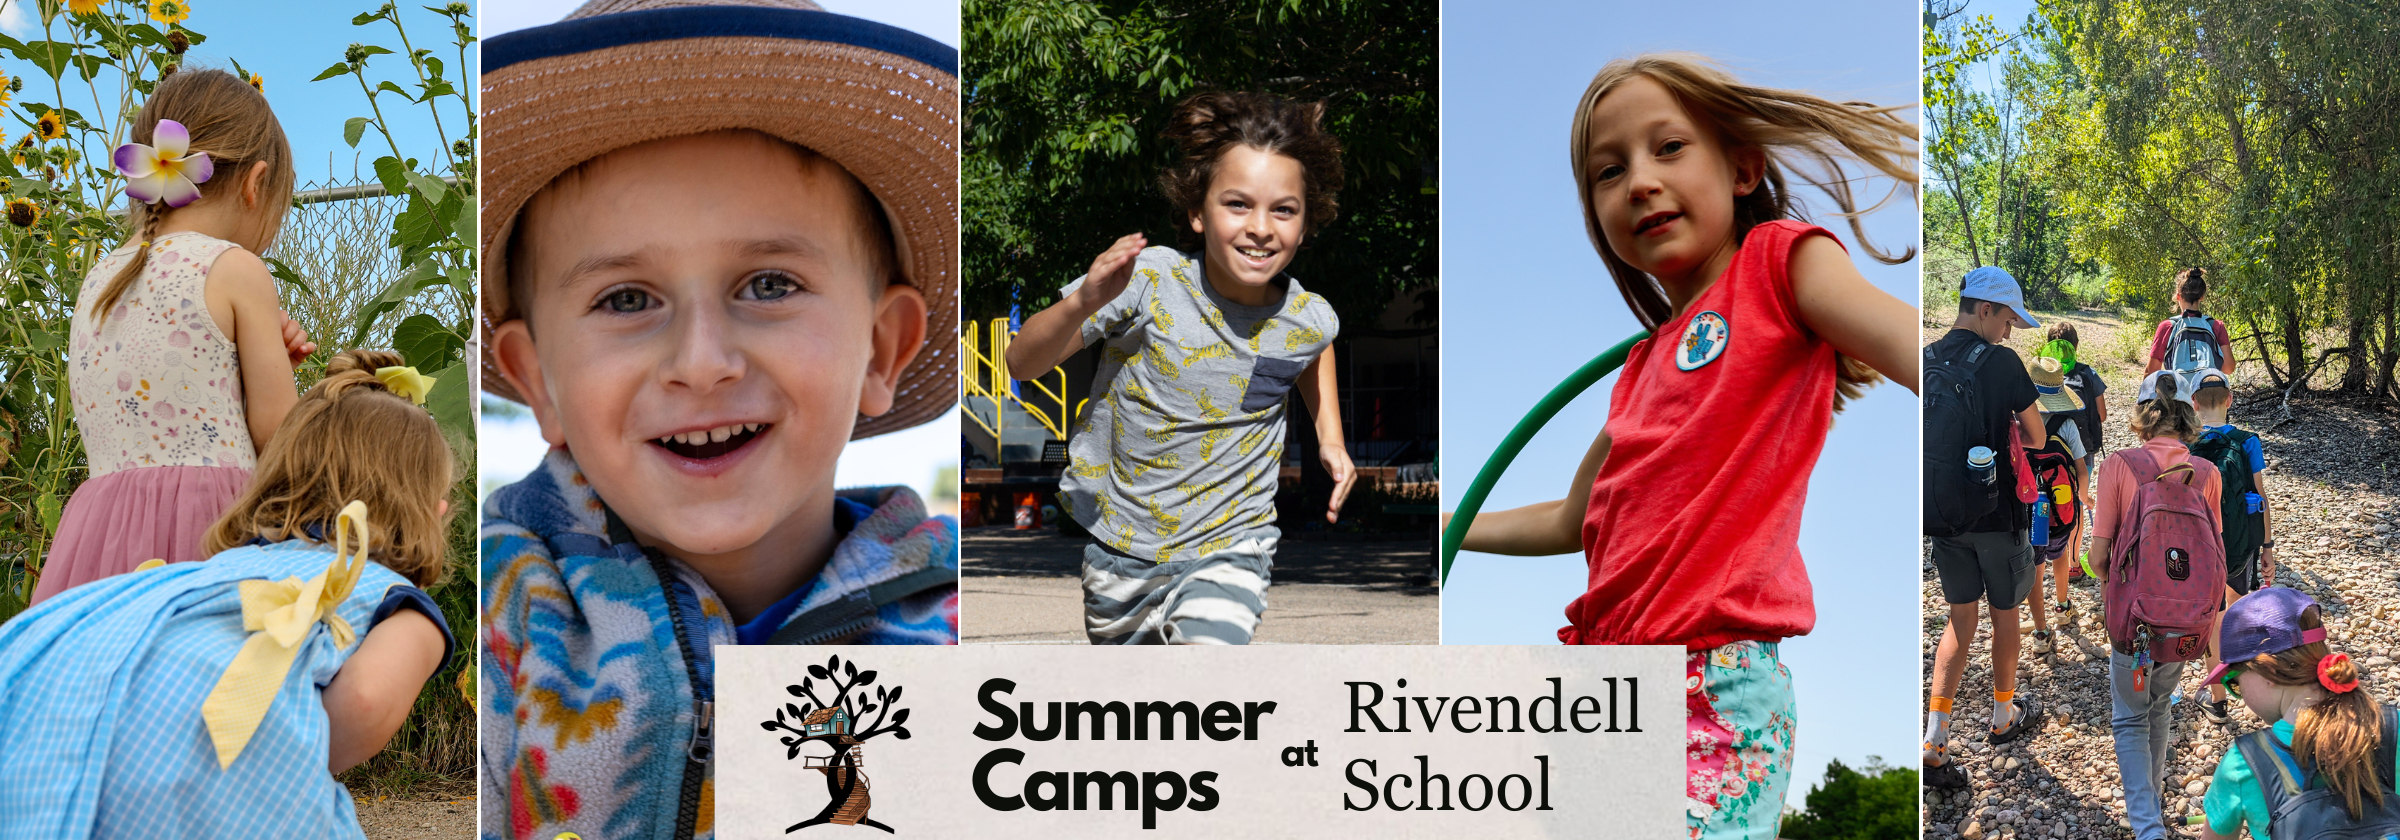 Rivendell School Summer Camps